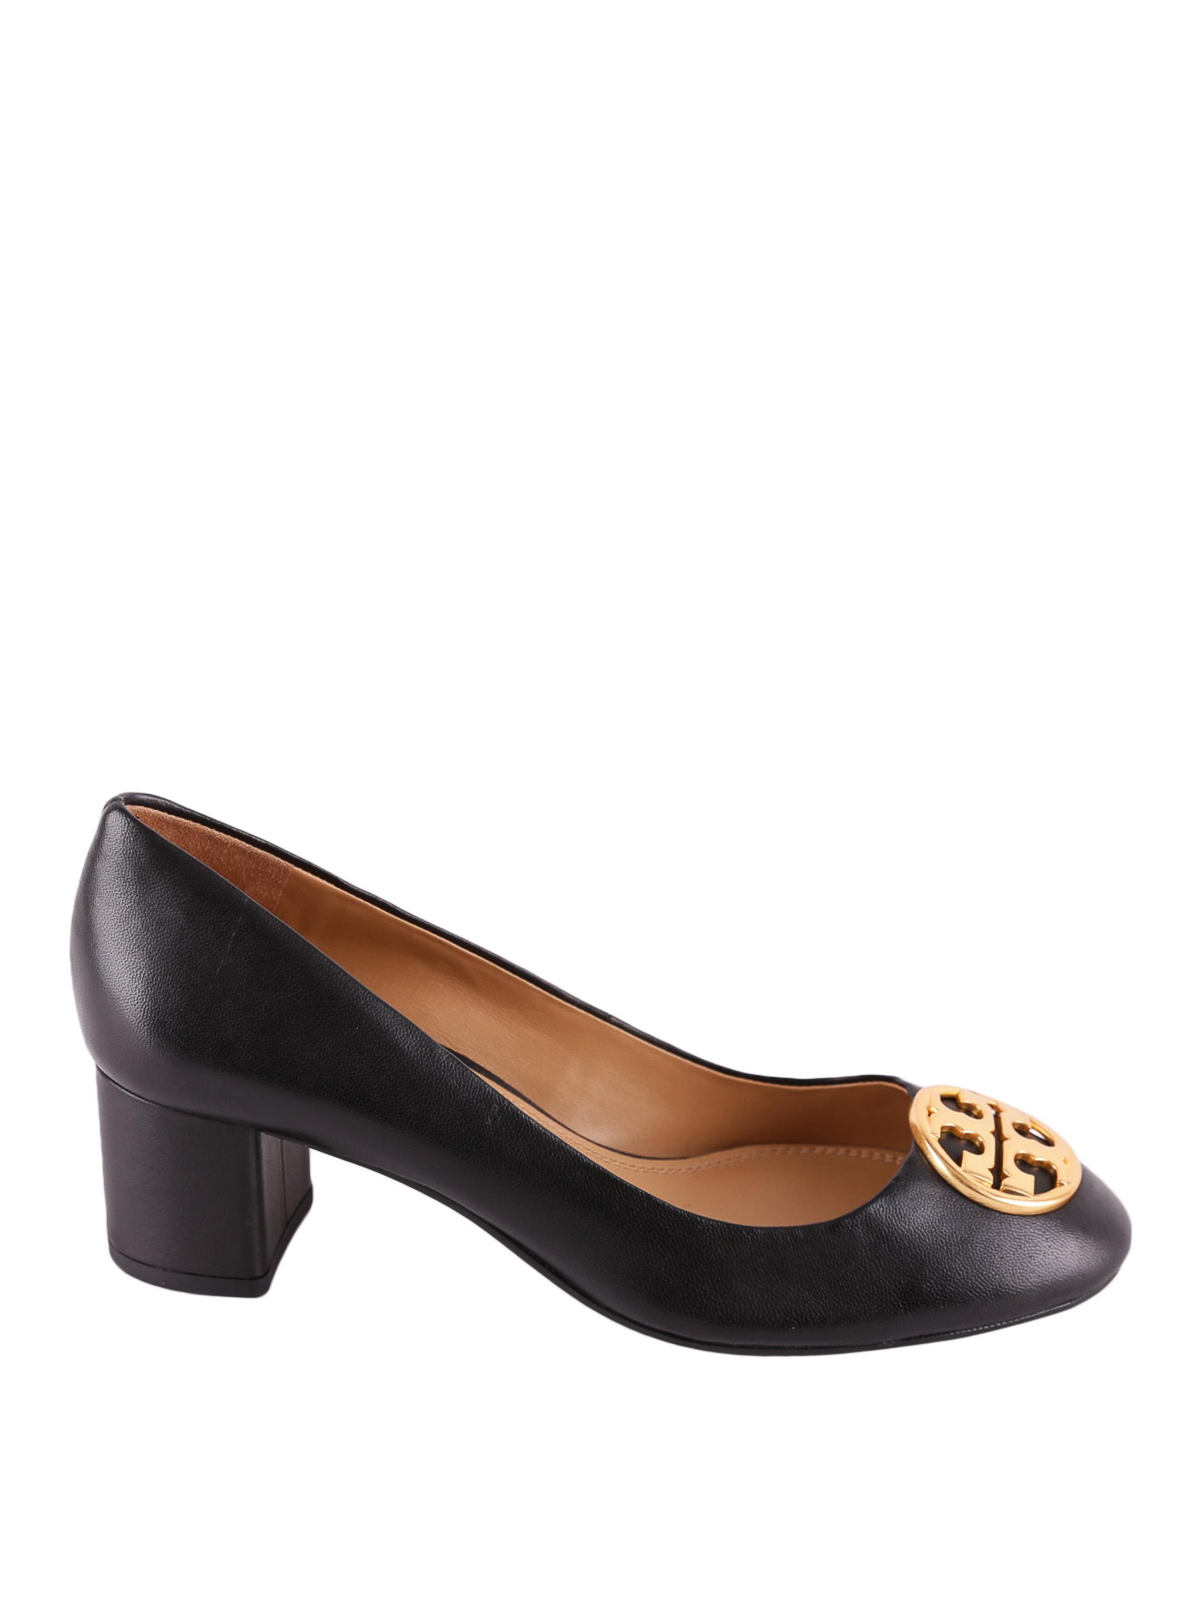 Court shoes Tory Burch - Chelsea black nappa pumps - 45900006 